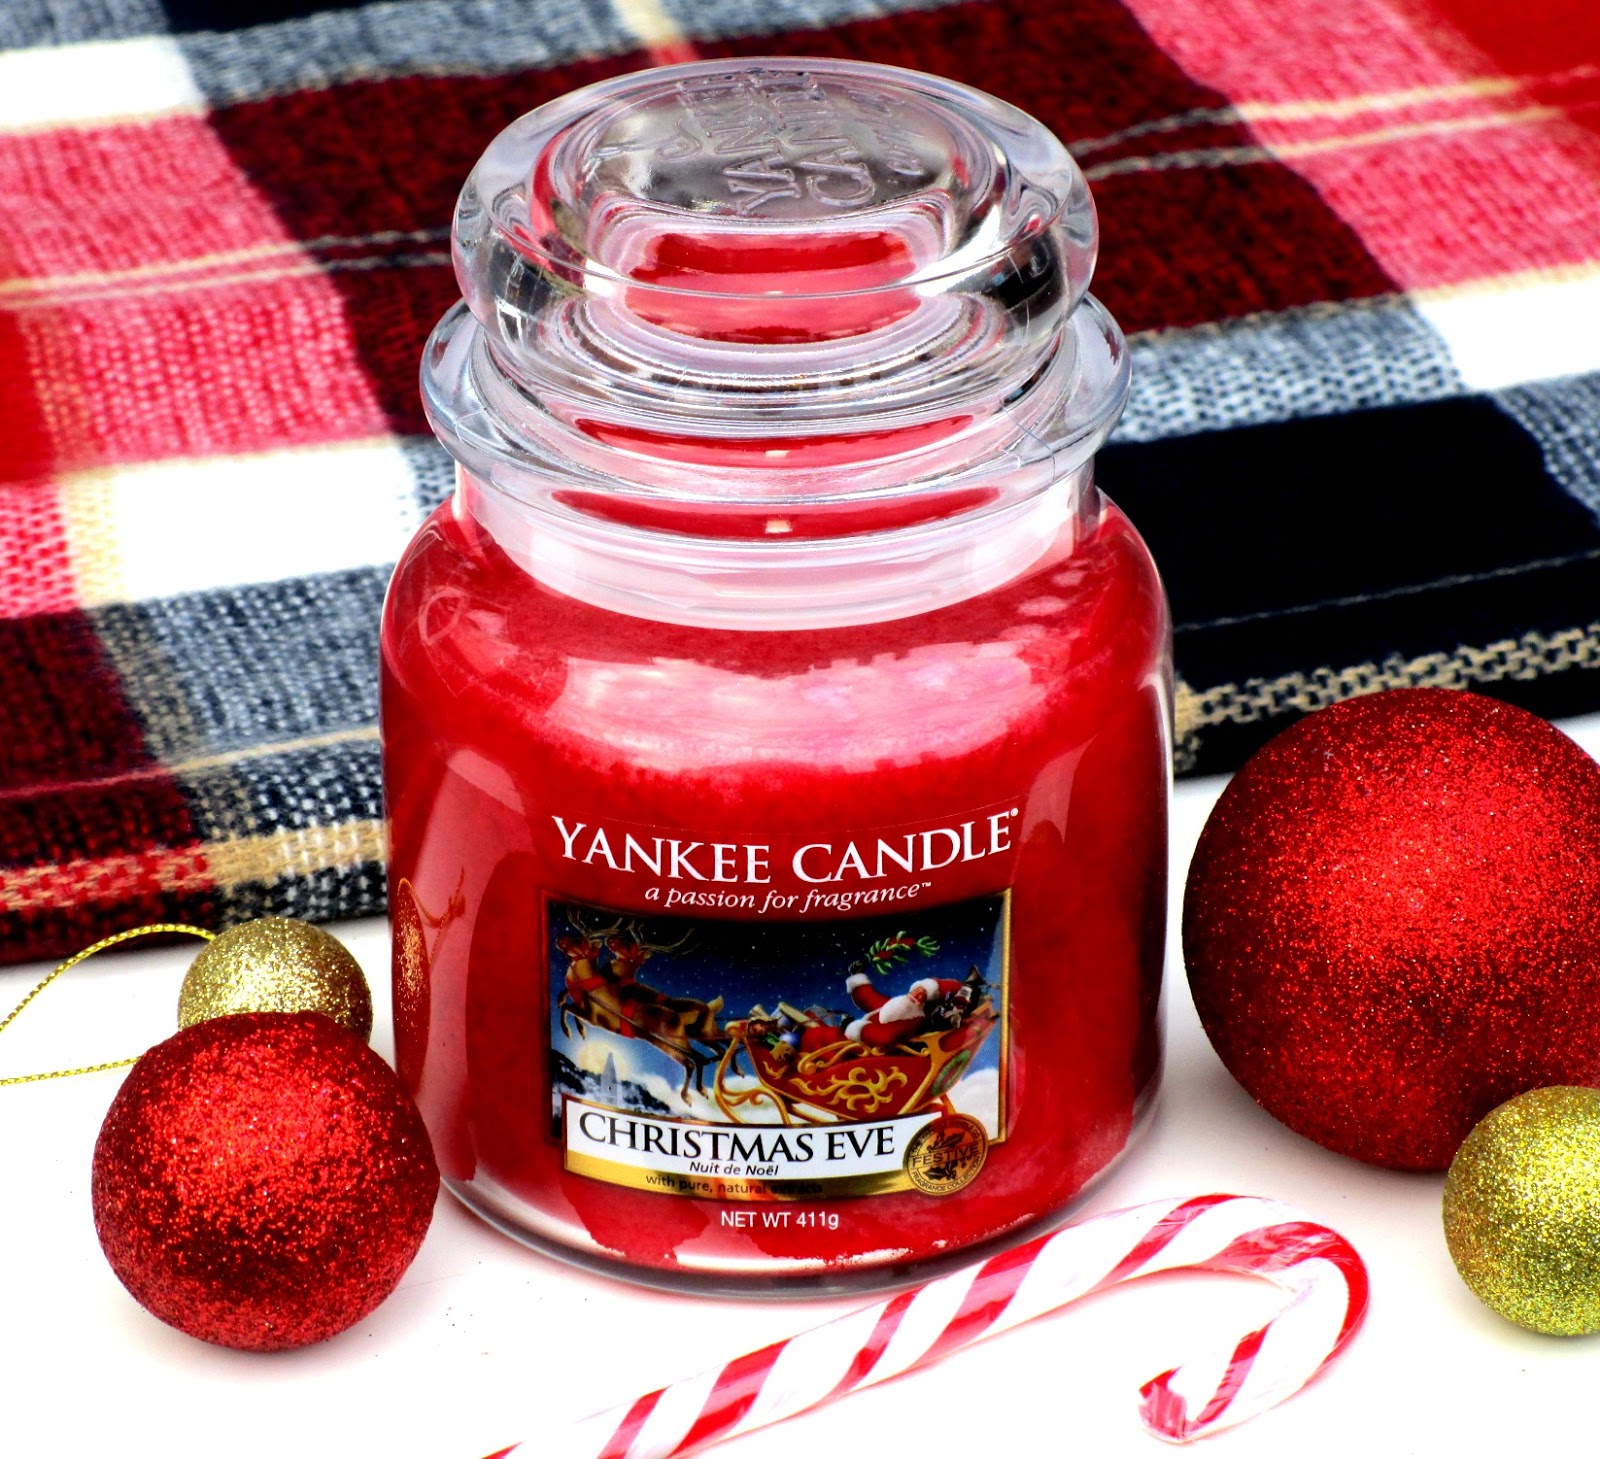 Christmas Eve Yankee Candle - Parfum Nuit de Noël